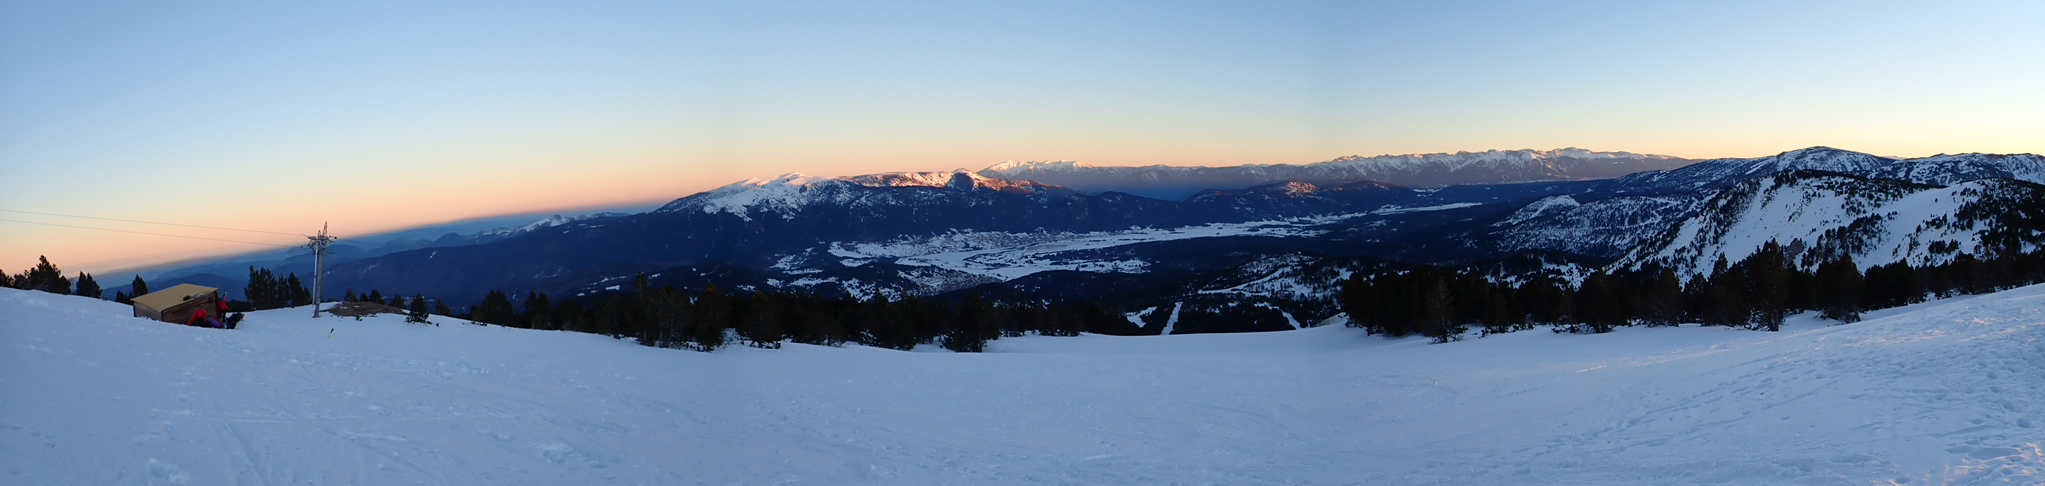 Panorámica desde el Pi de Ginebre, 2.382 mts. De izquierda a derecha: pequeño refugio de la cima, Puig de La Pelada, llano nevado del Capcir, al fondo el Canigó, Pirineo Oriental, Serrat de La Llisa Cremada